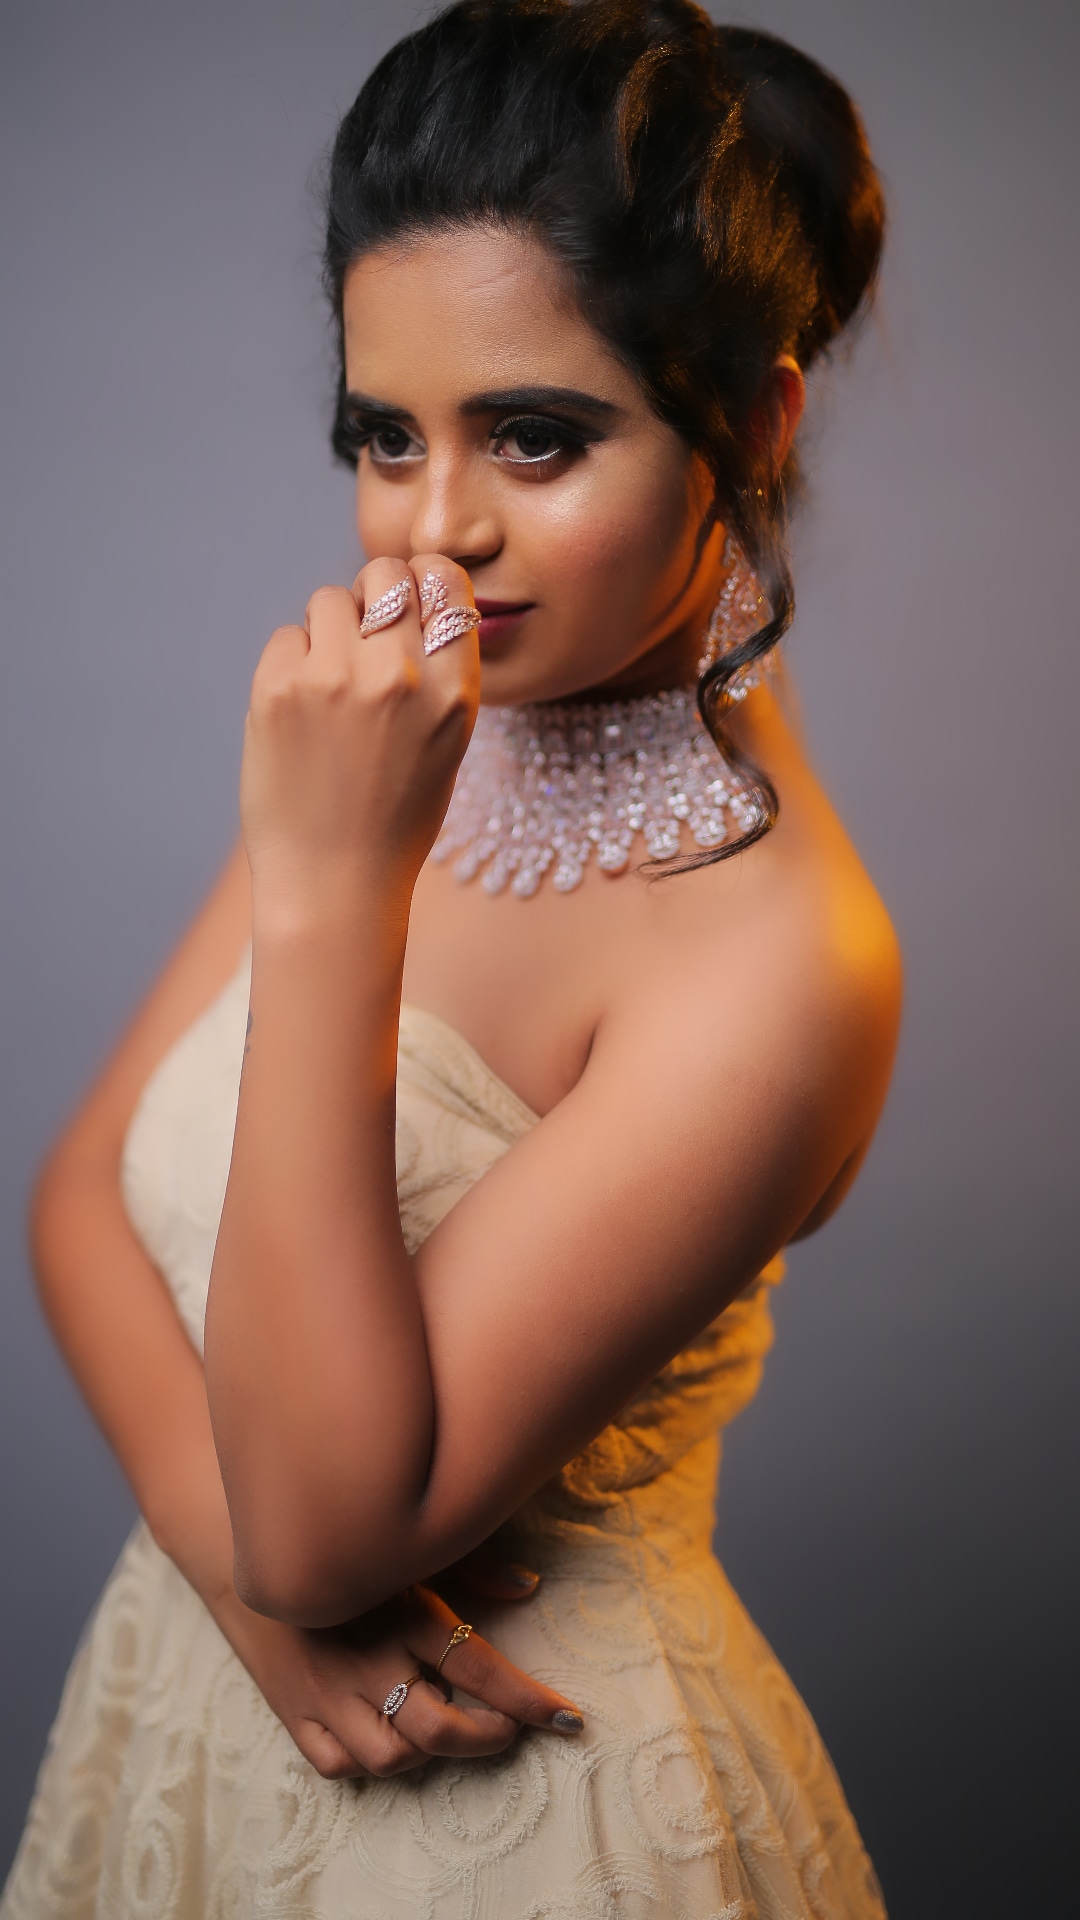 nithya-n-gowda-makeup-artist-bangalore